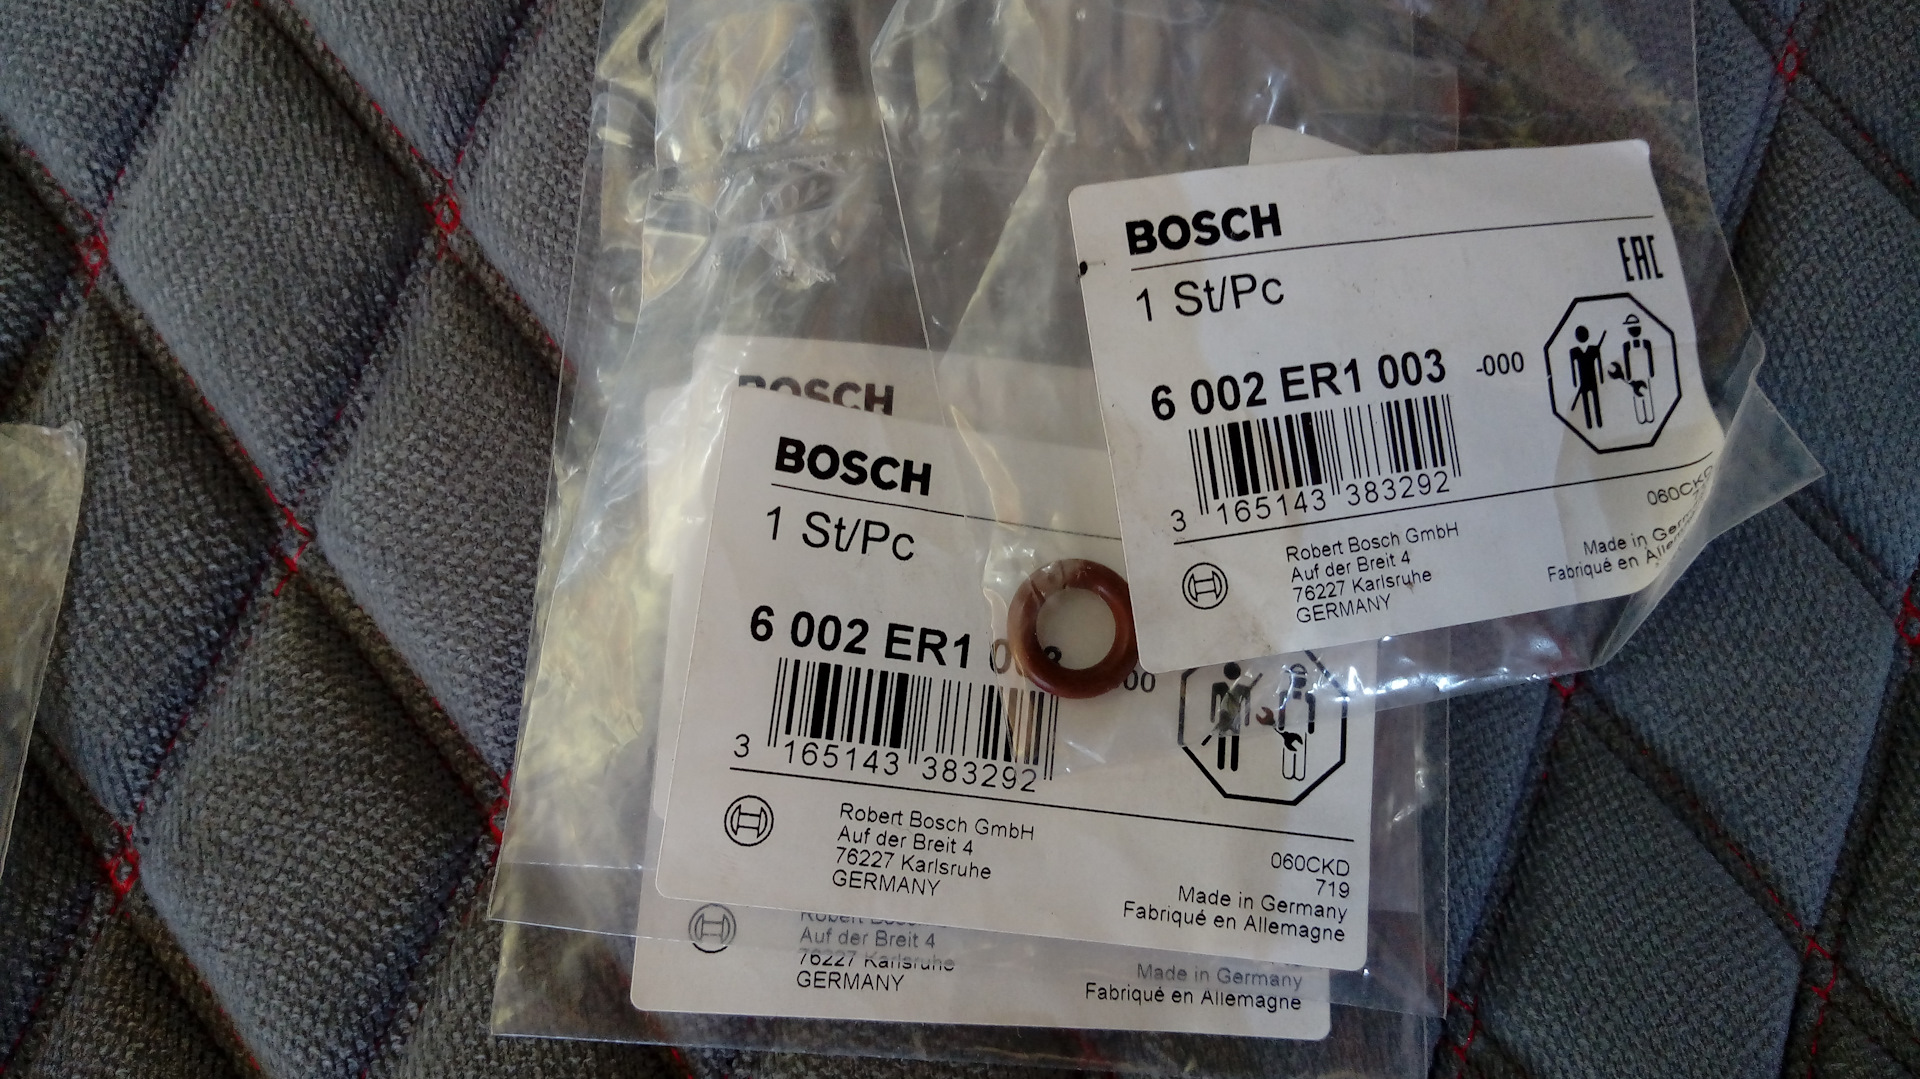 003 01. Bosch 6002er1003 кольцо уплотнительное. 6002er1003 Bosch кольцо уплотнительное форсунки. 6 002 Er1 003 кольцо уплотнительное форсунки Bosch. 6002er1003 Bosch.